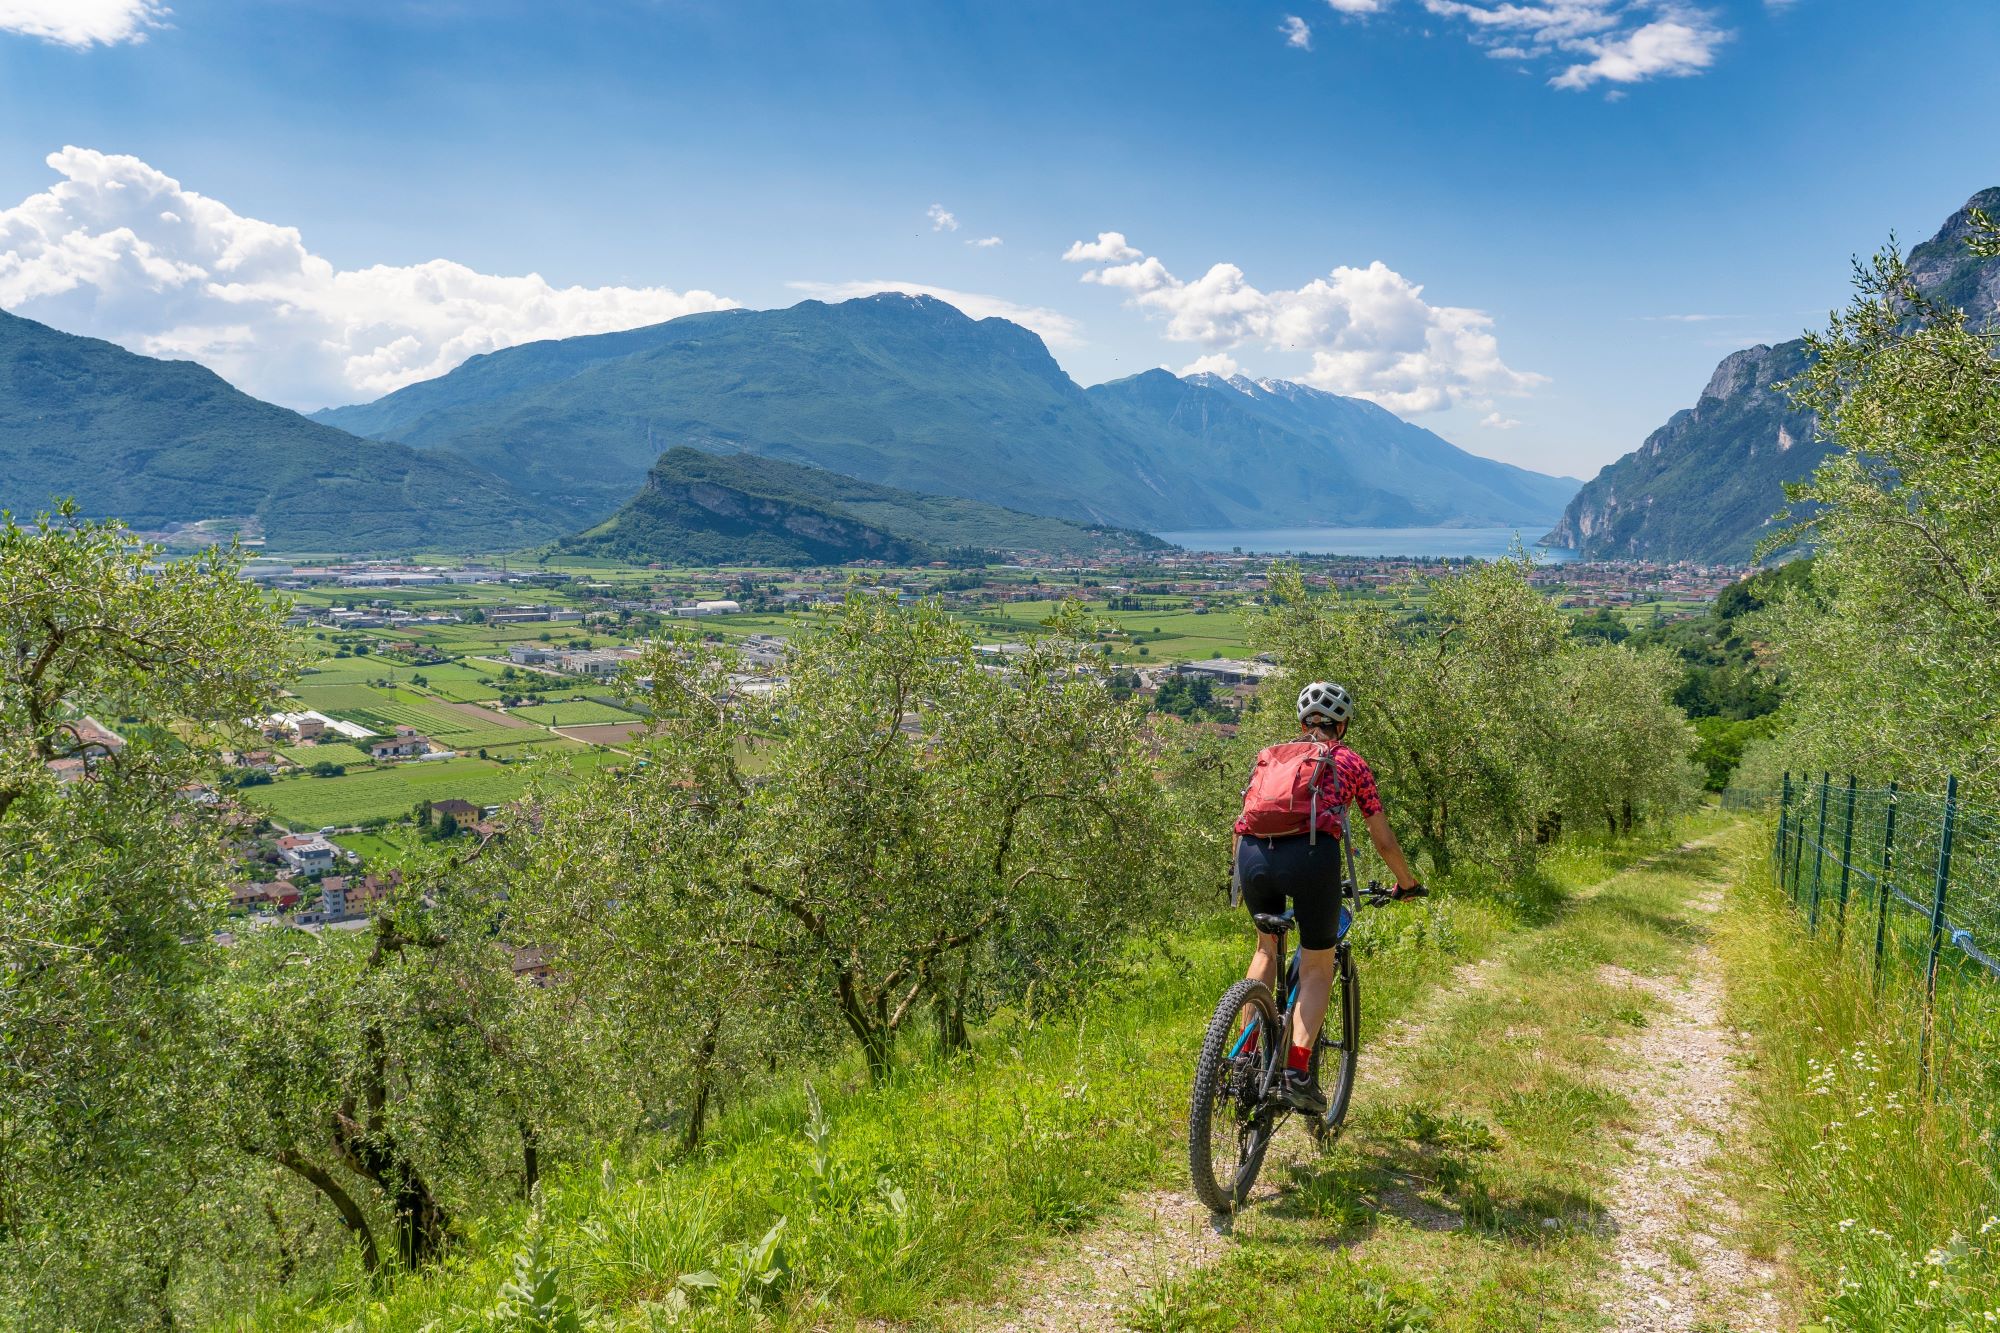 There are numerous mountain bike trails around Lake Garda